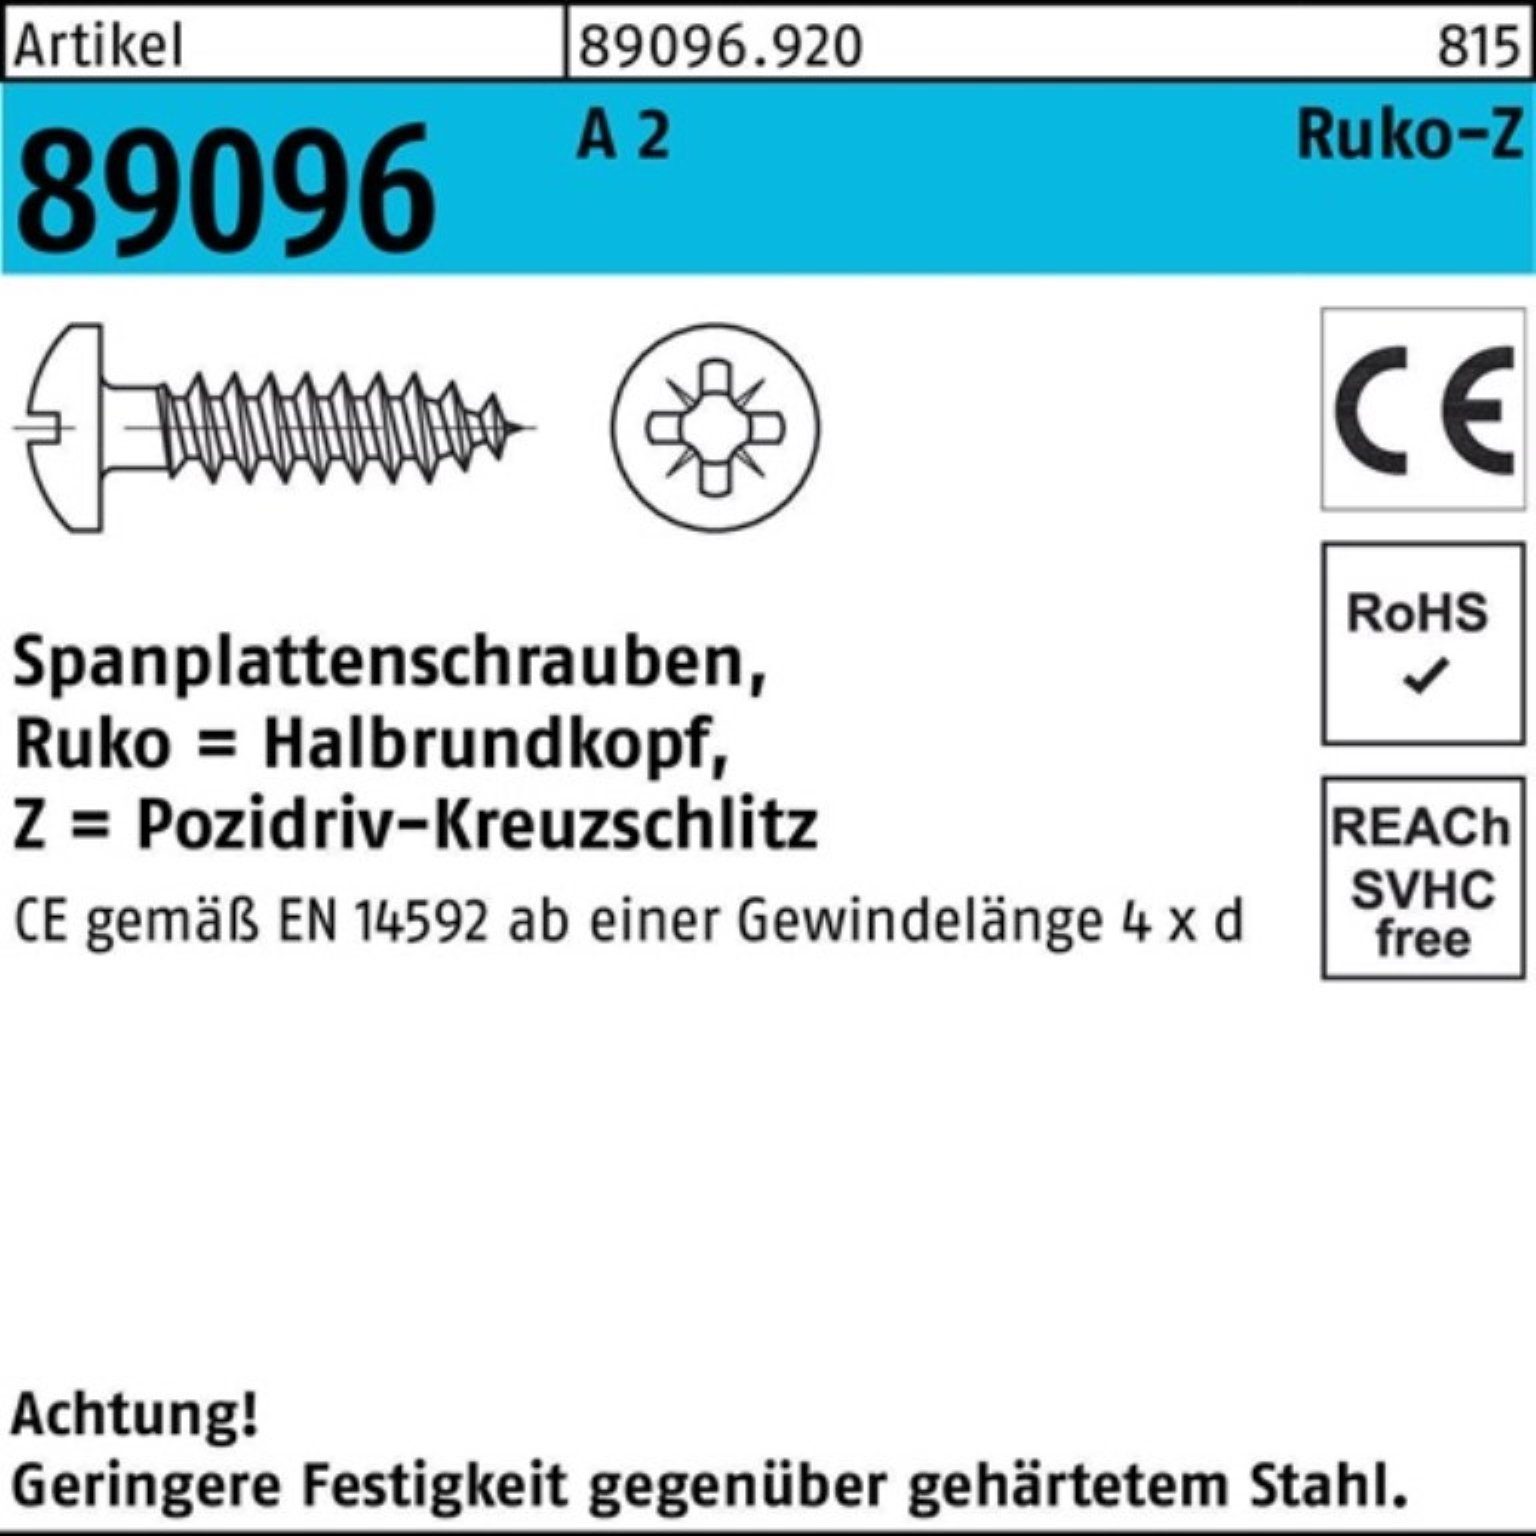 R 5x Stüc 2 89096 1000 HAKO PZ Spanplattenschraube A 45-Z Spanplattenschraube 1000er Reyher Pack